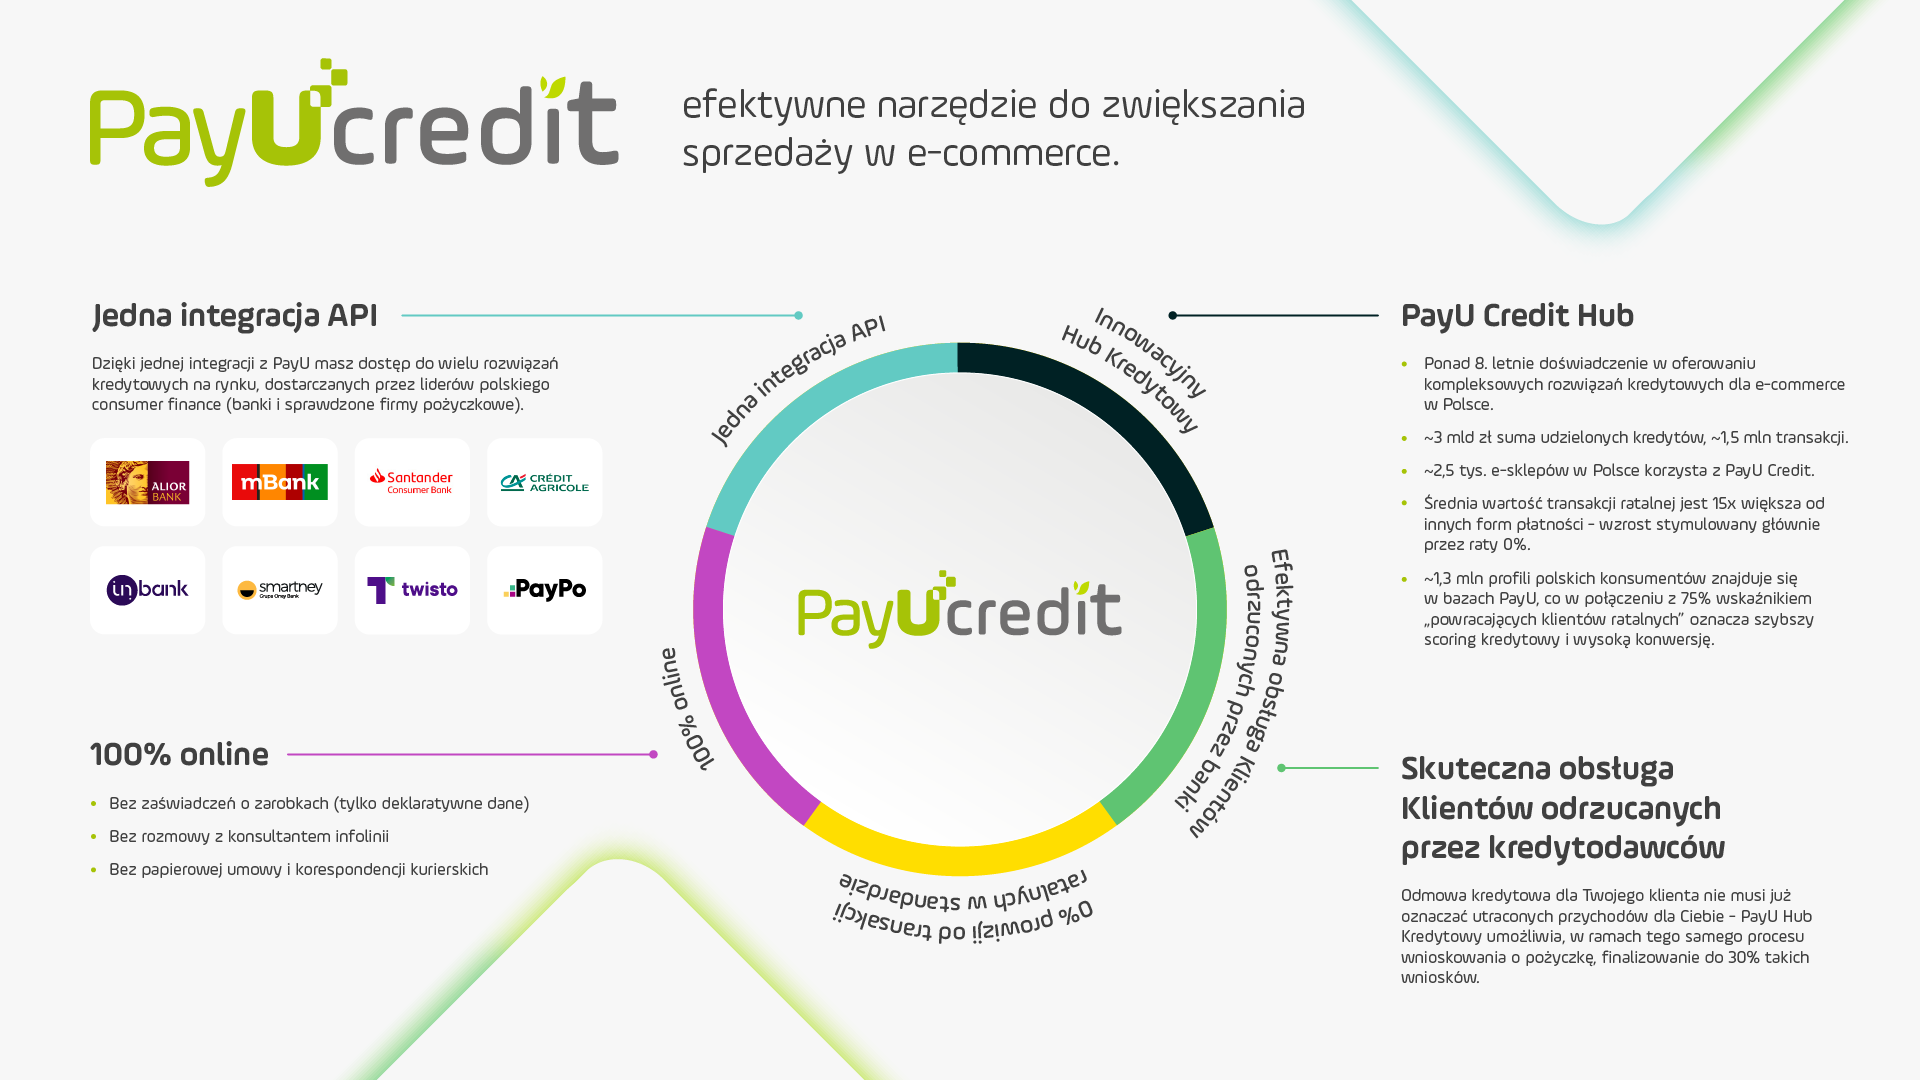 payU credit